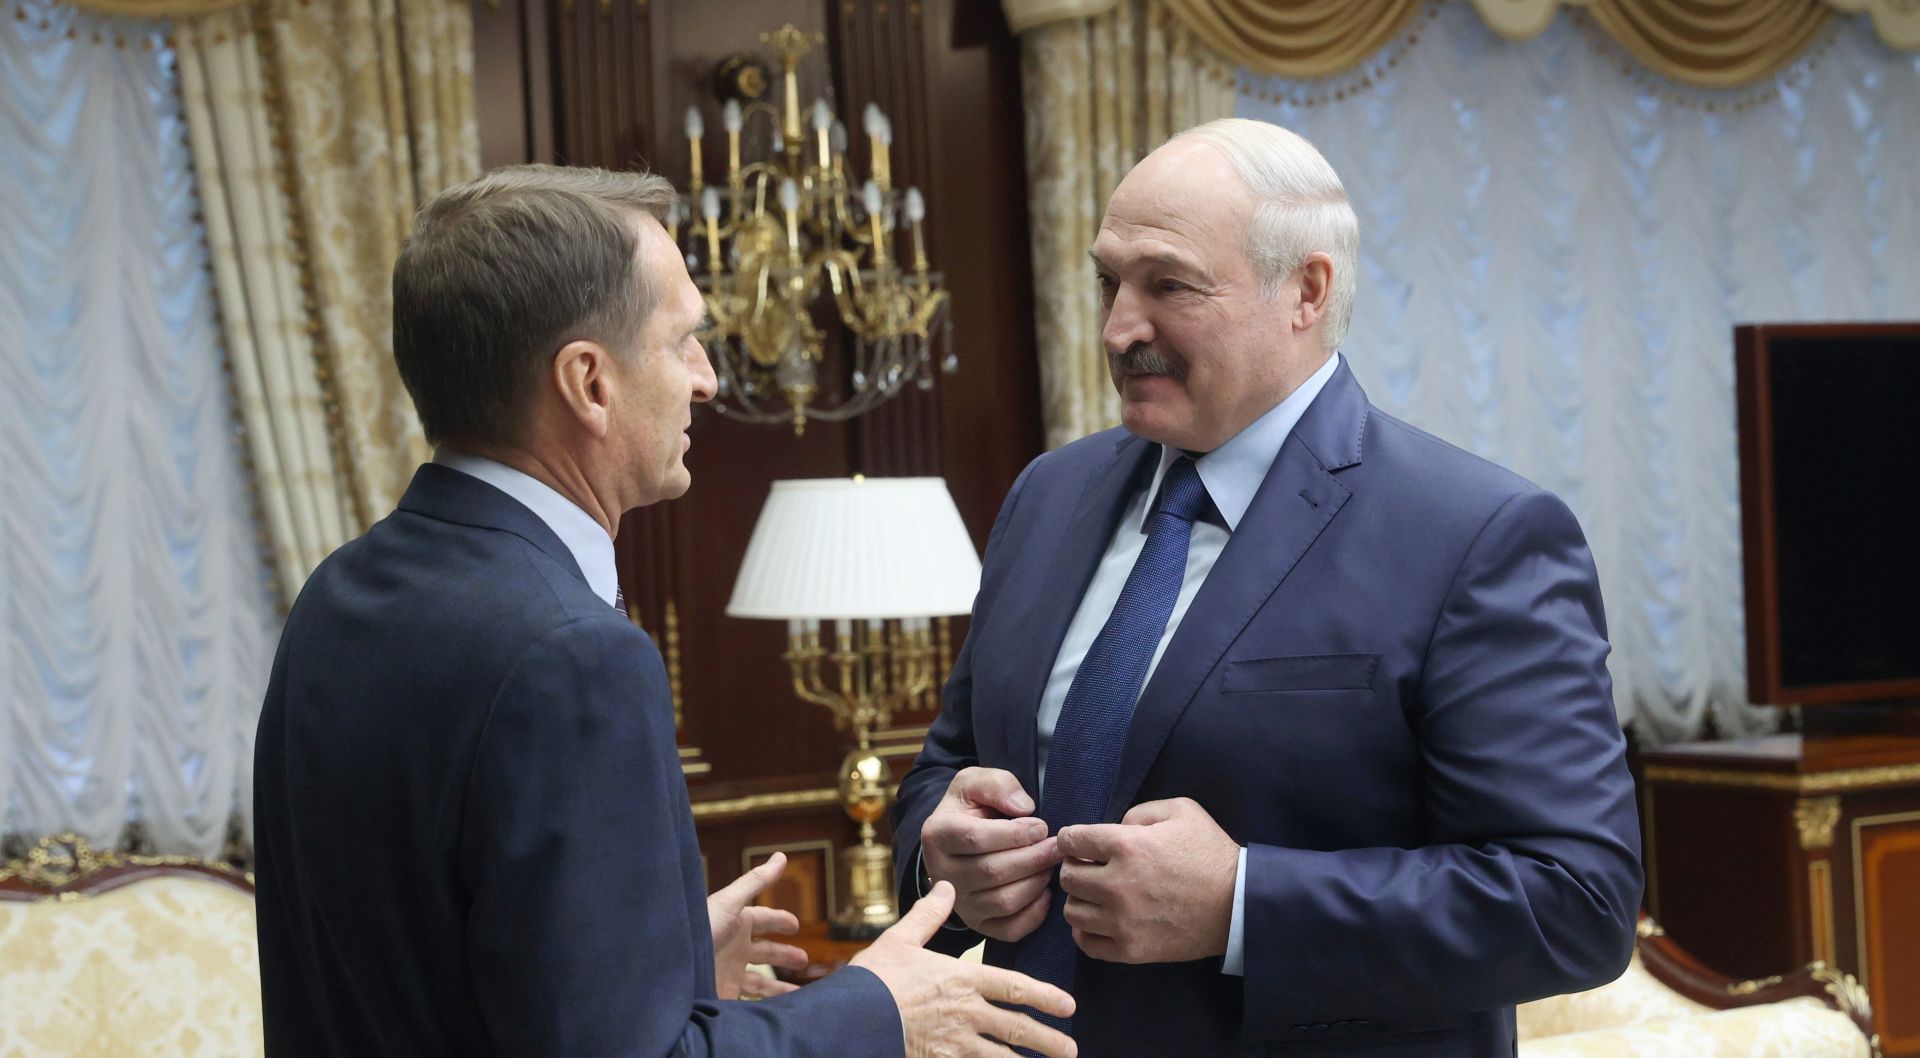 epa08764923 Belarusian President Alexander Lukashenko (R), talks to Sergei Naryshkin (L), head of the Russian Foreign Intelligence Service, during their meeting in Minsk, Belarus, 22 October 2020.  EPA/NIKOLAI PETROV / POOL MANDATORY CREDIT